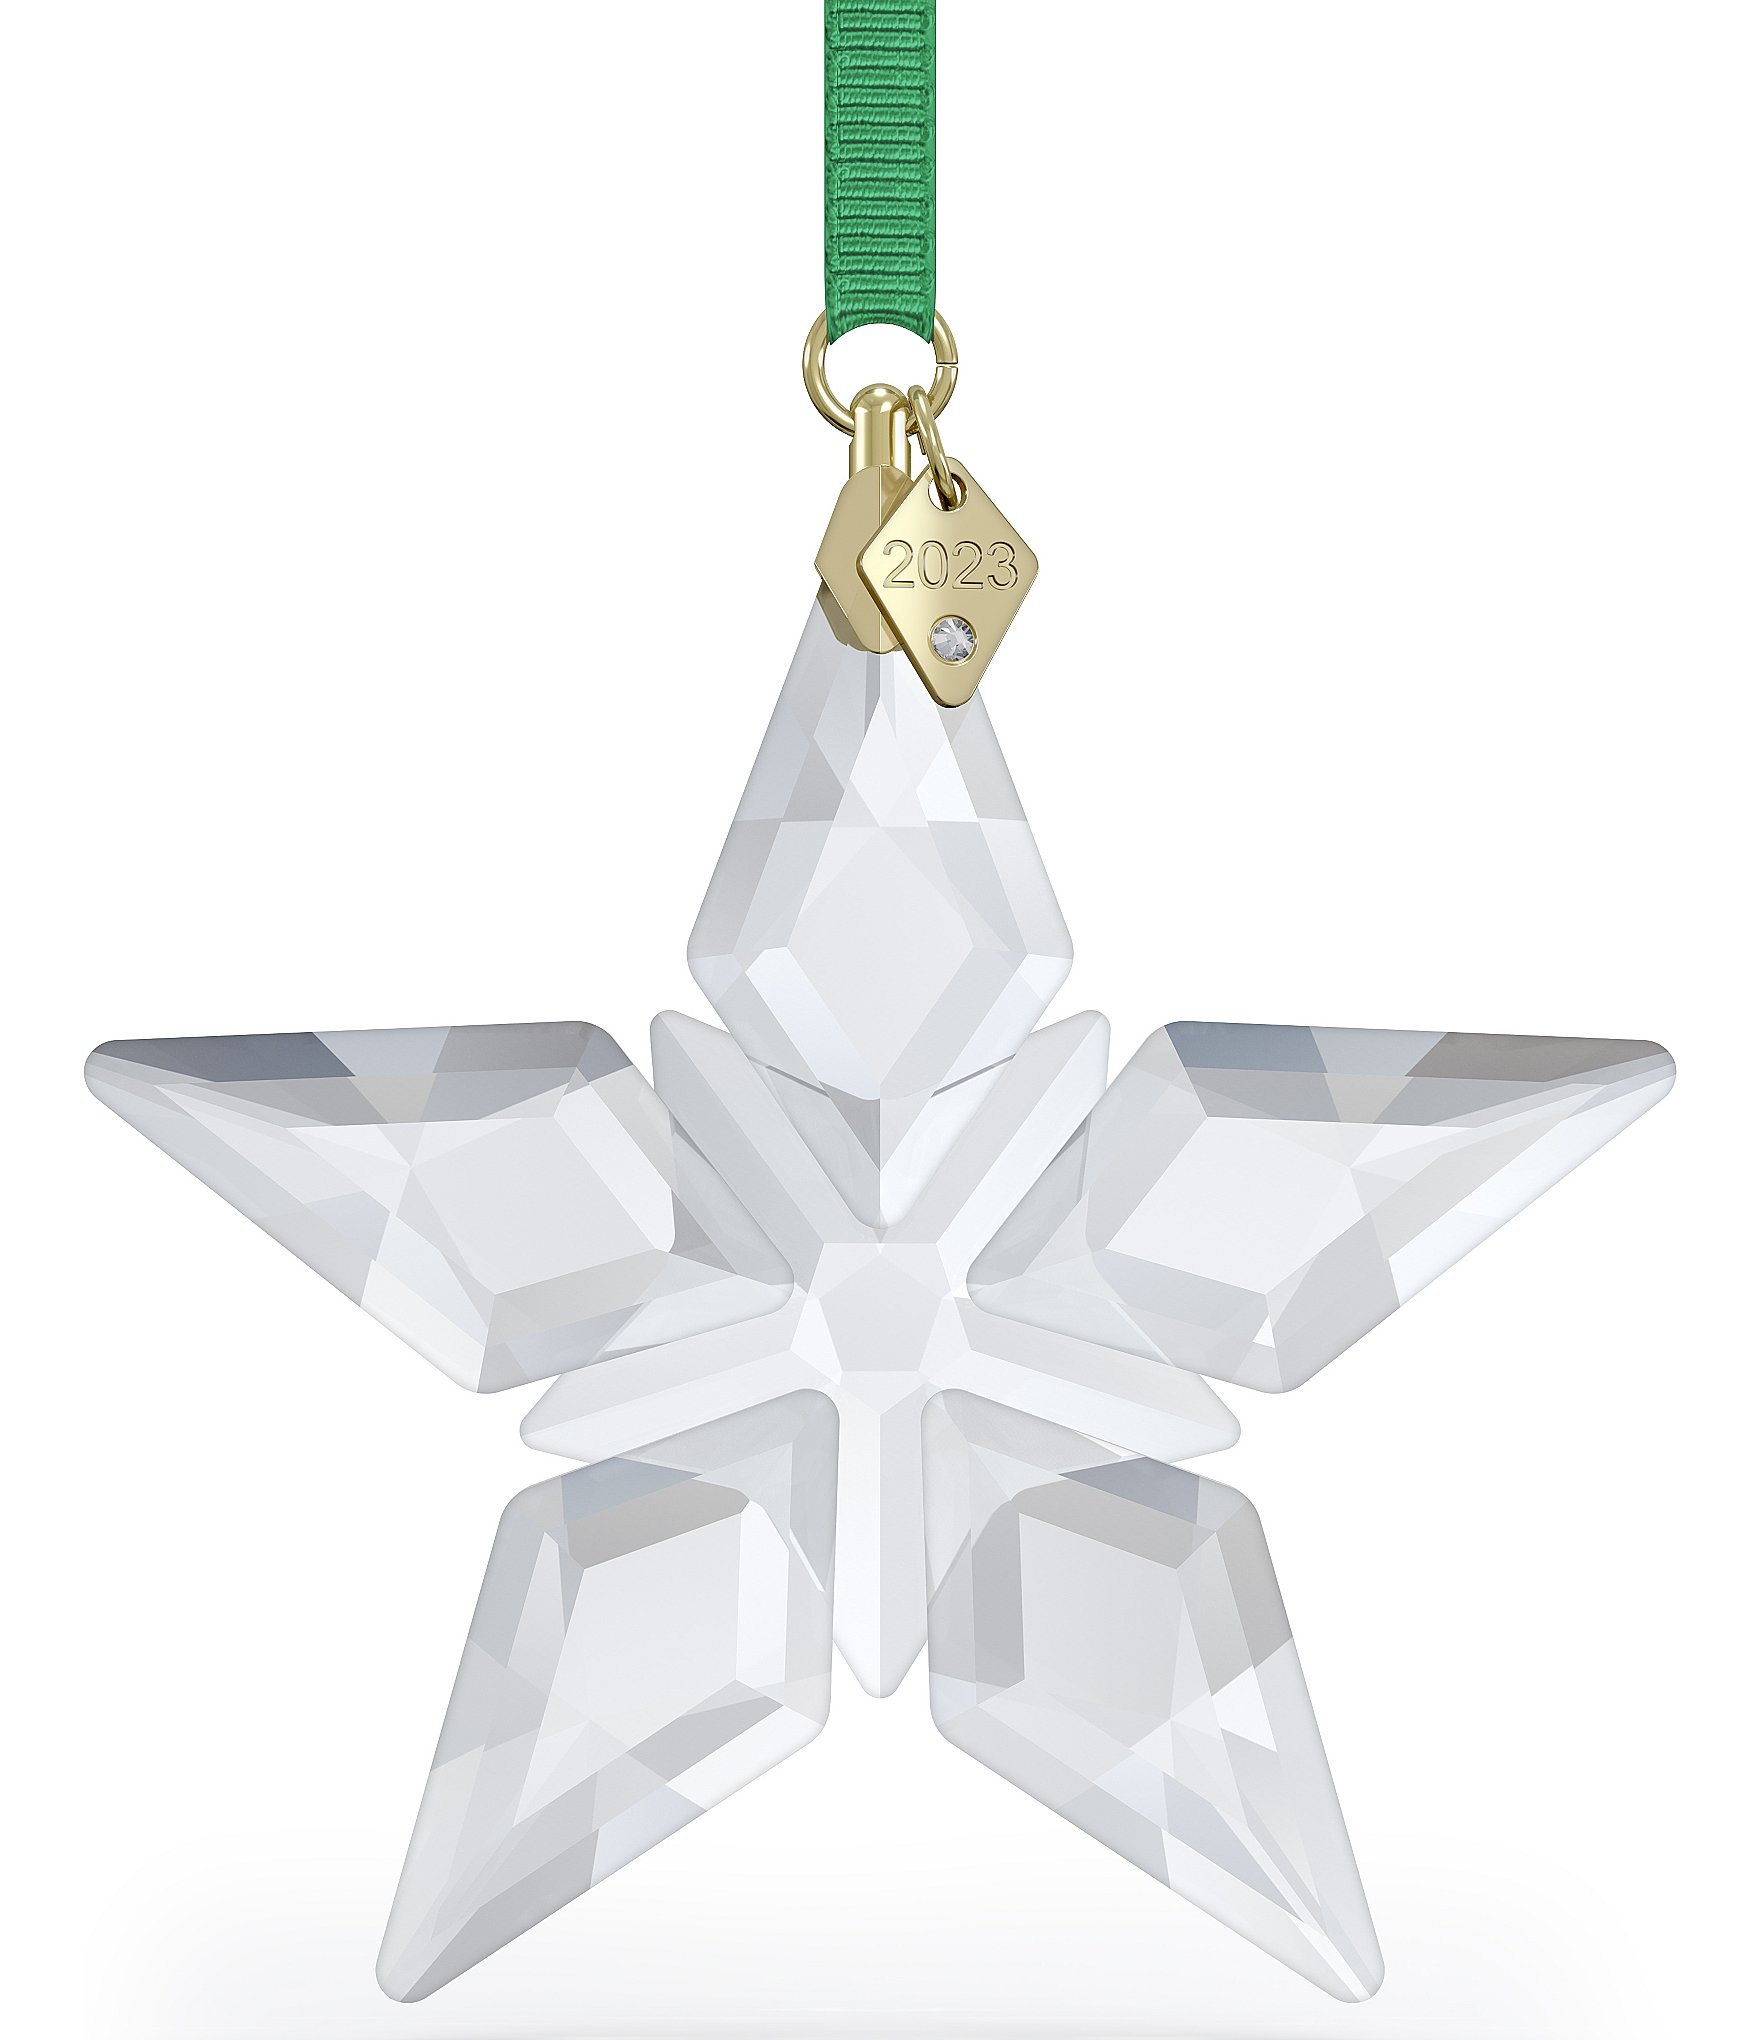 Swarovski Crystal Annual Edition Ornament 2023 Dillard's